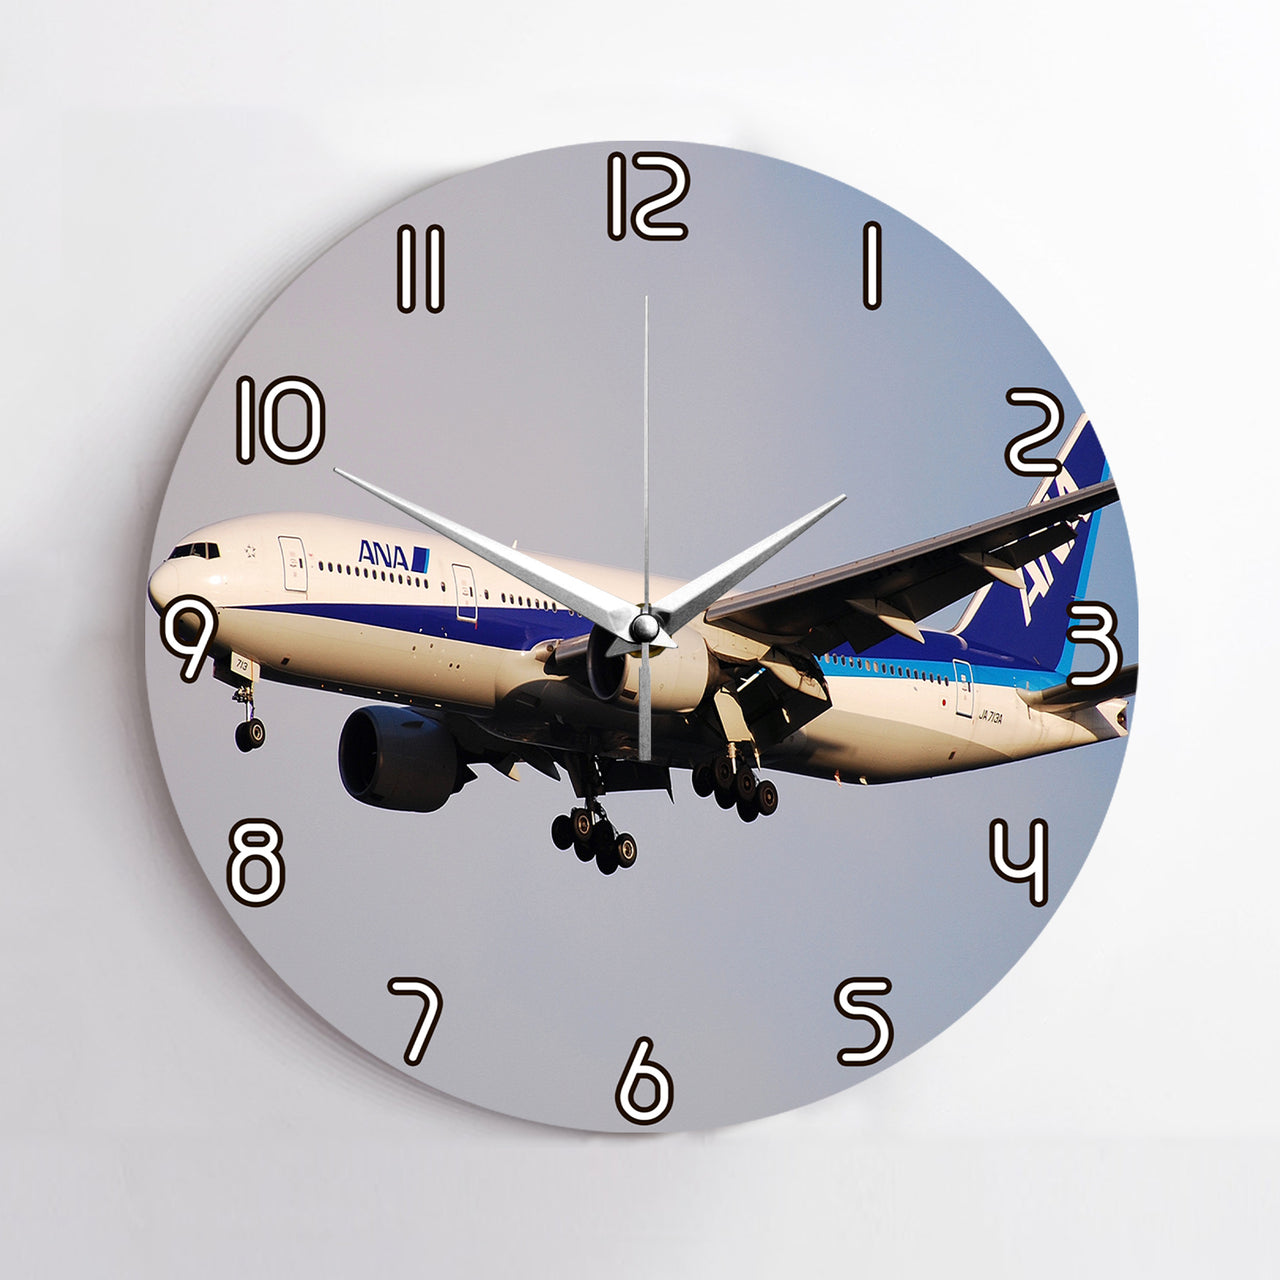 ANA's Boeing 777 Printed Wall Clocks